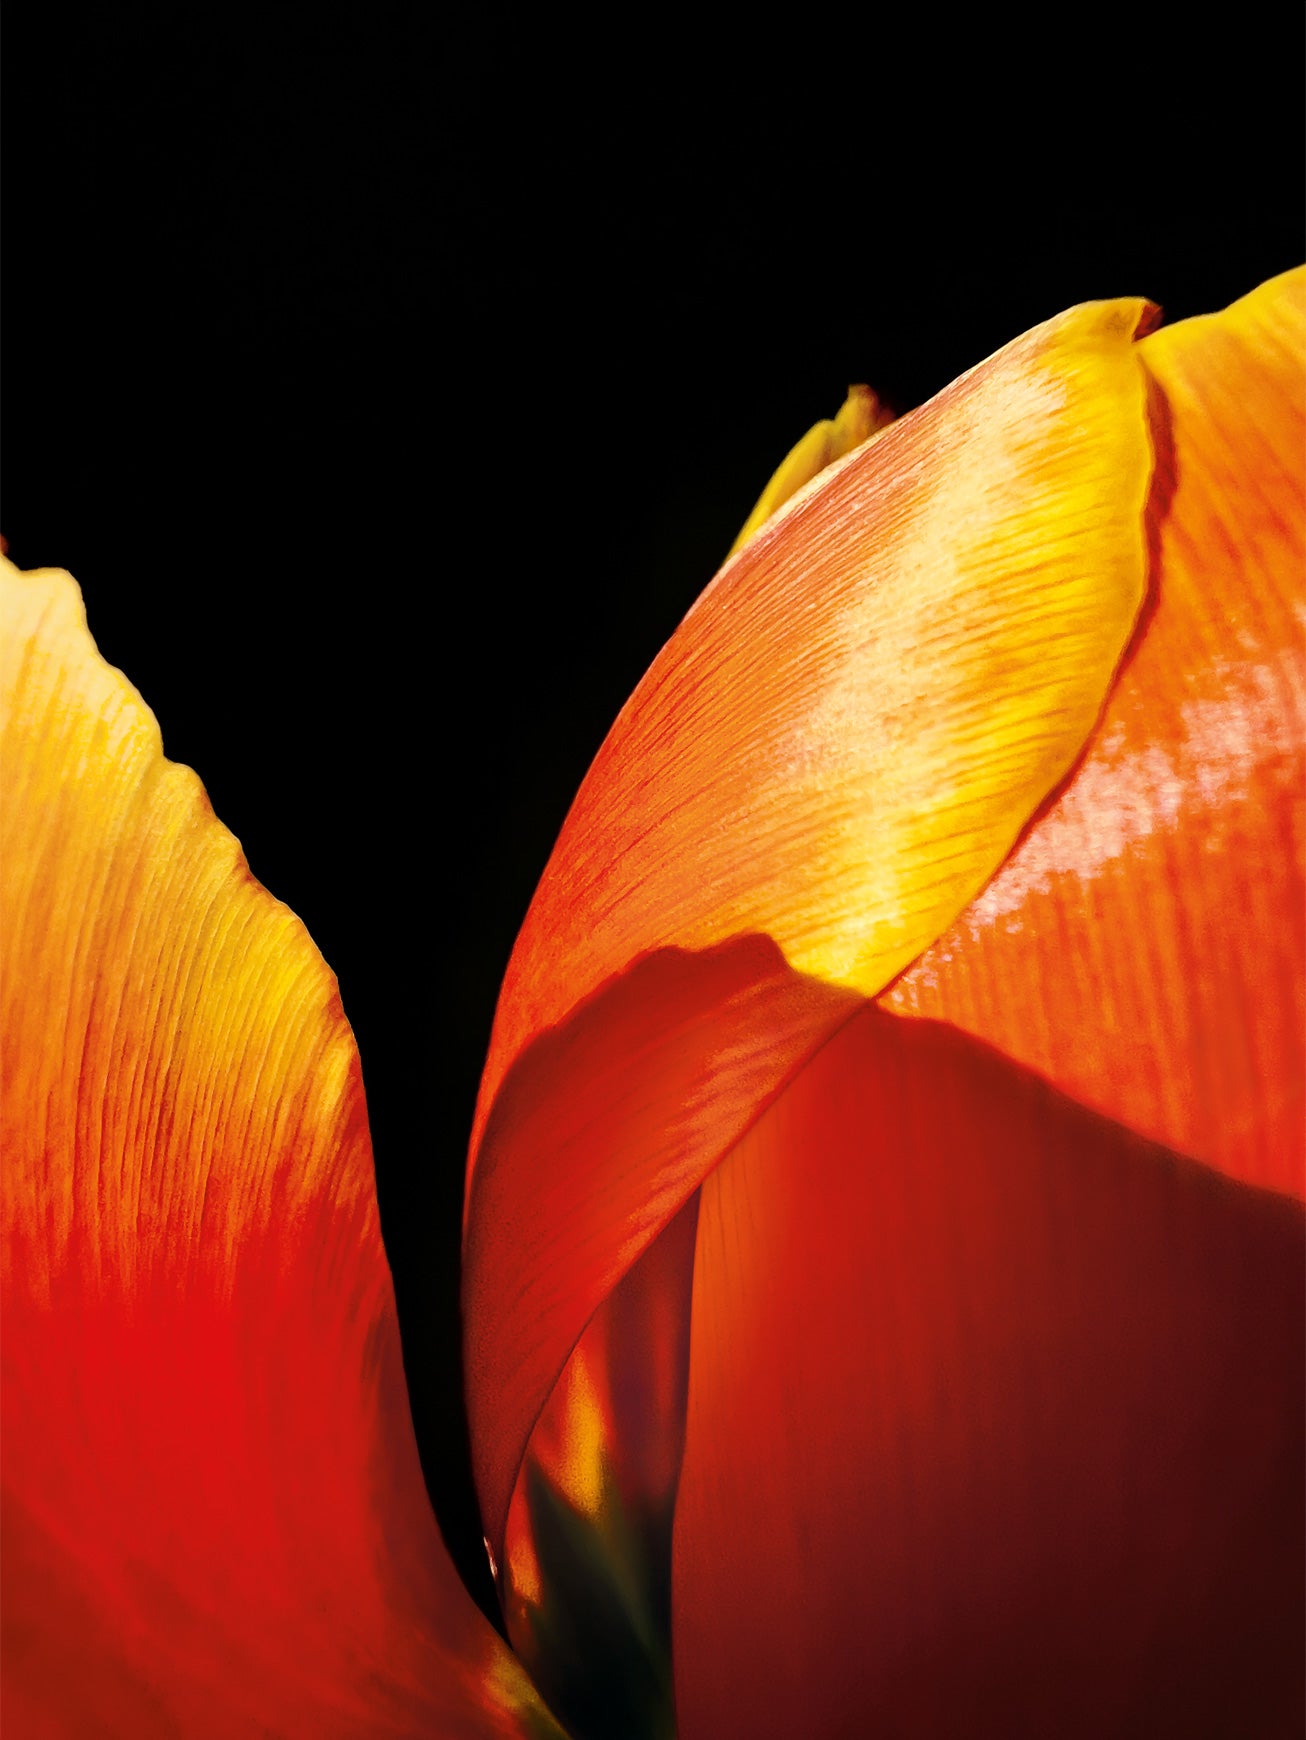 light hits orange tulip petals apple shot on iphone macro challenge 